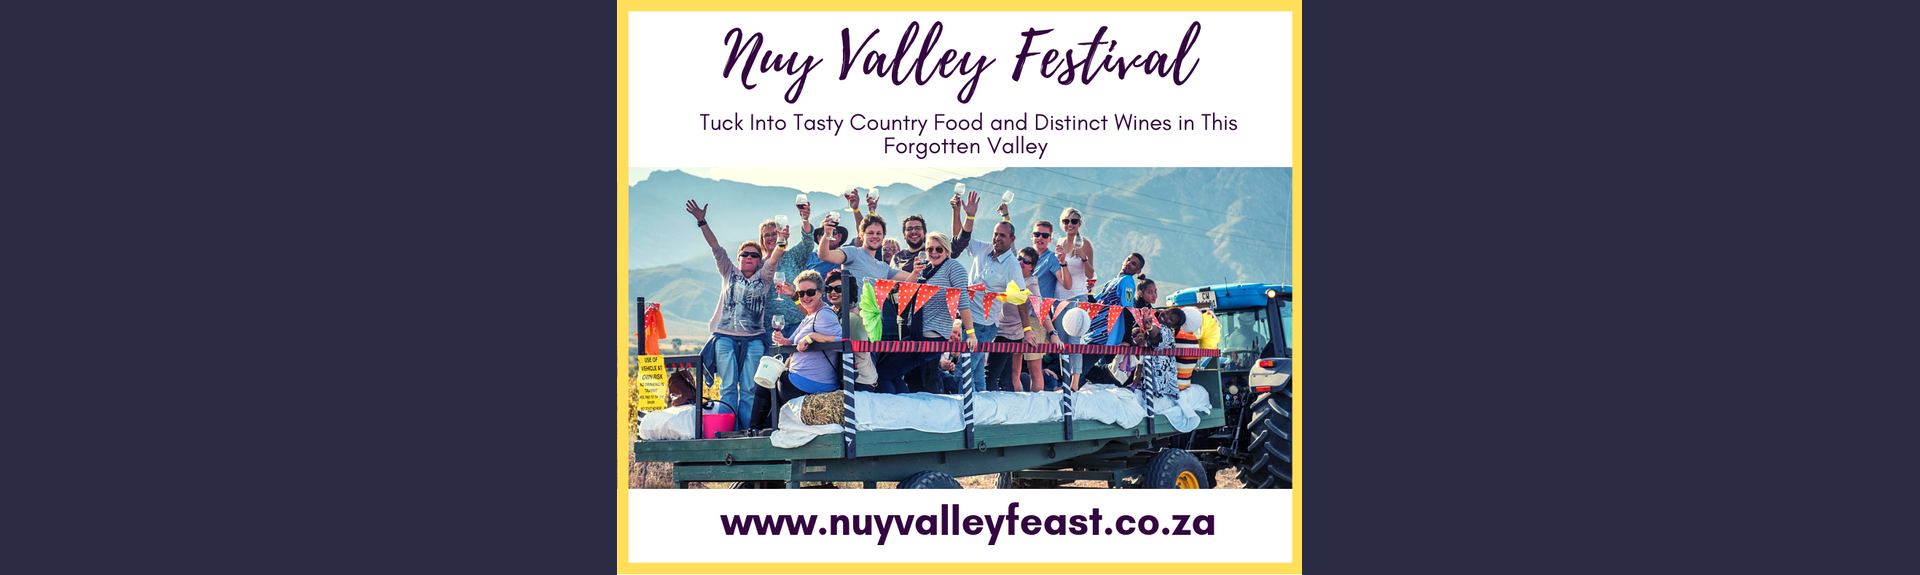 Nuy Valley Festival